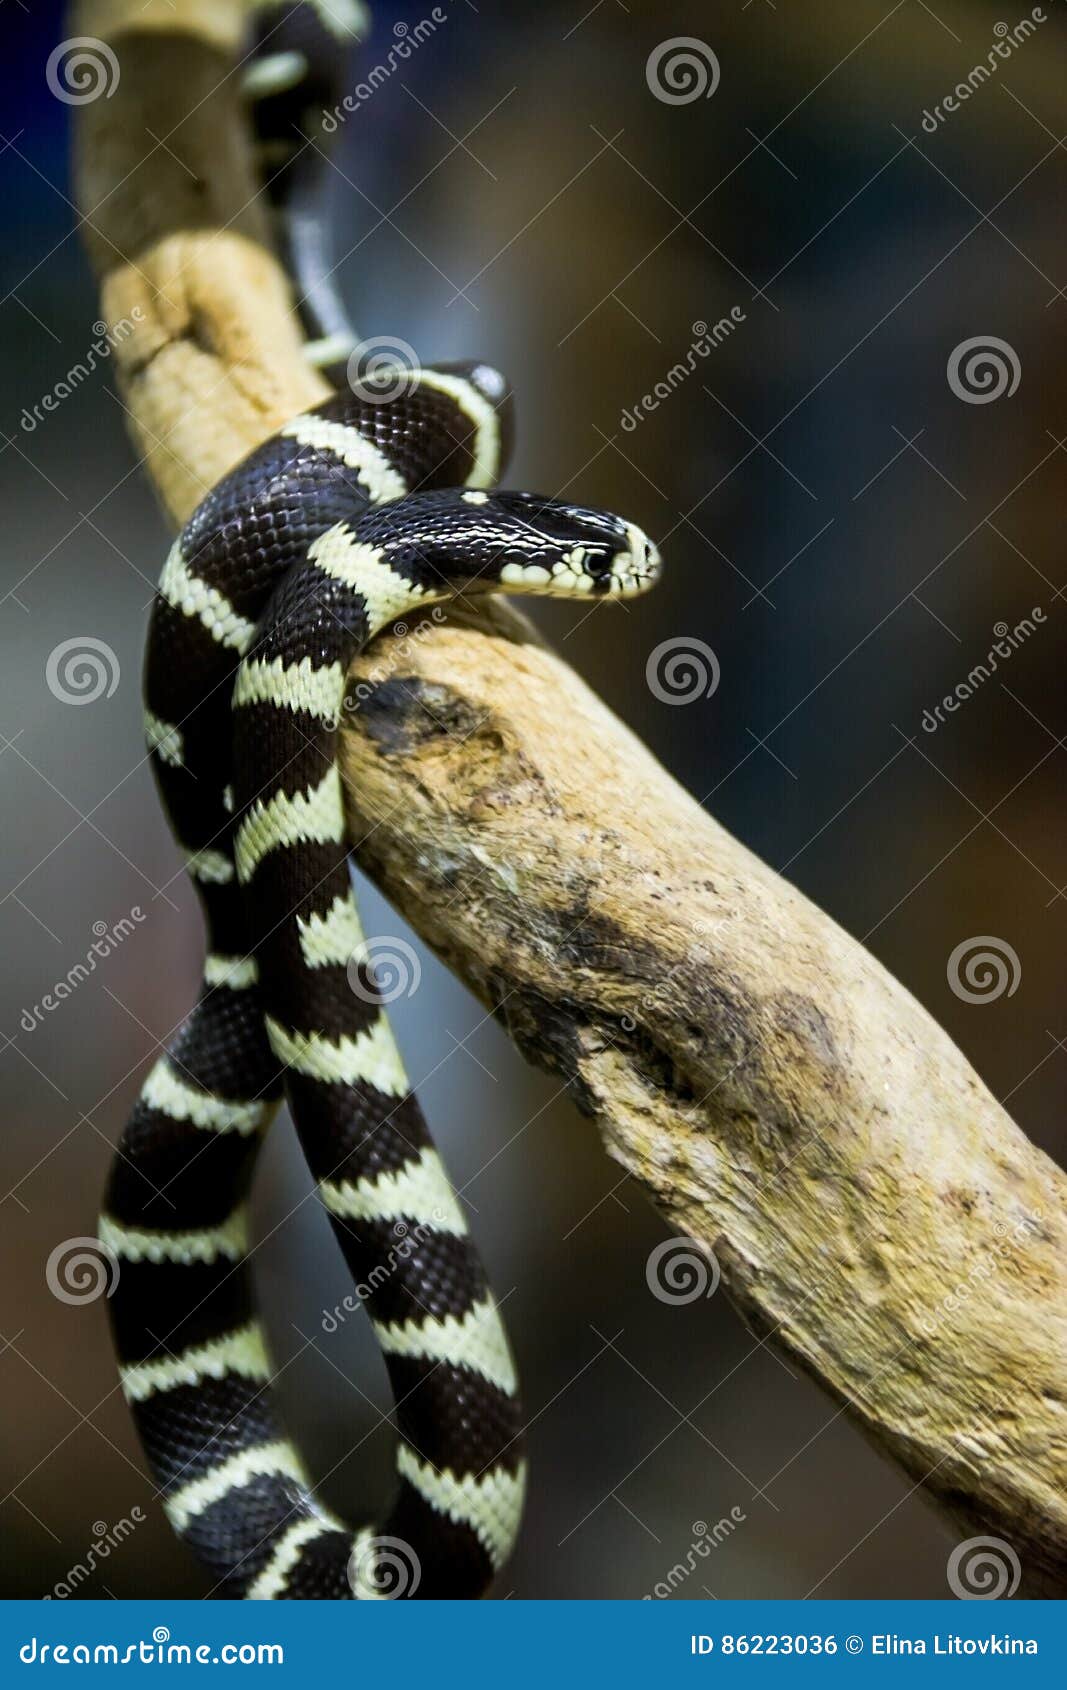 california king snake